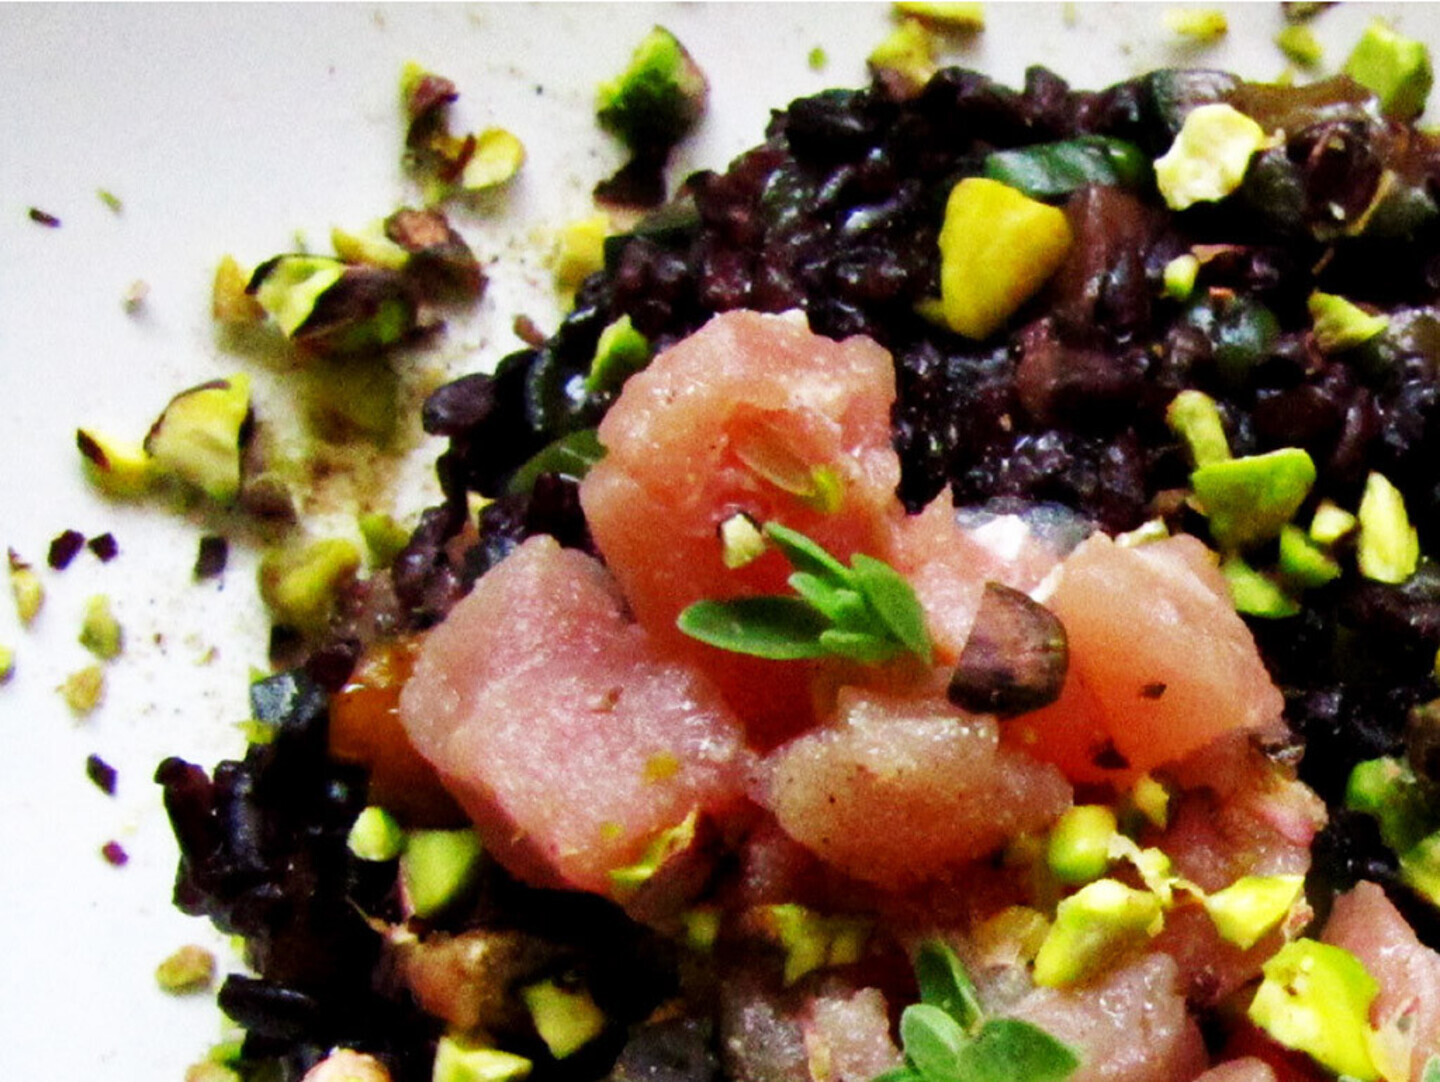 Black venus rice with tuna tartare and pistacchio grains